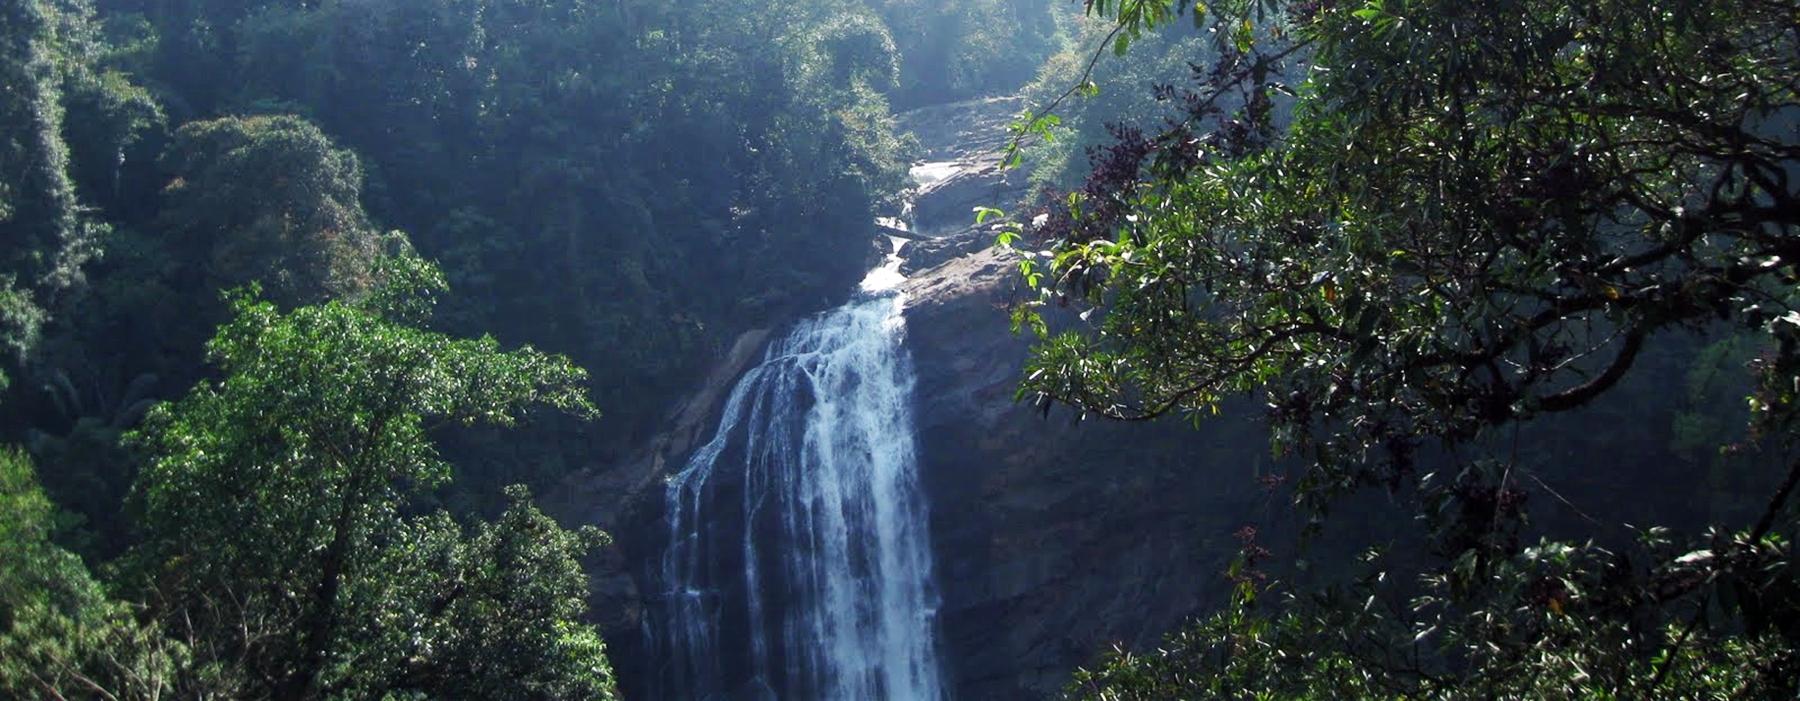 Valara Waterfalls 